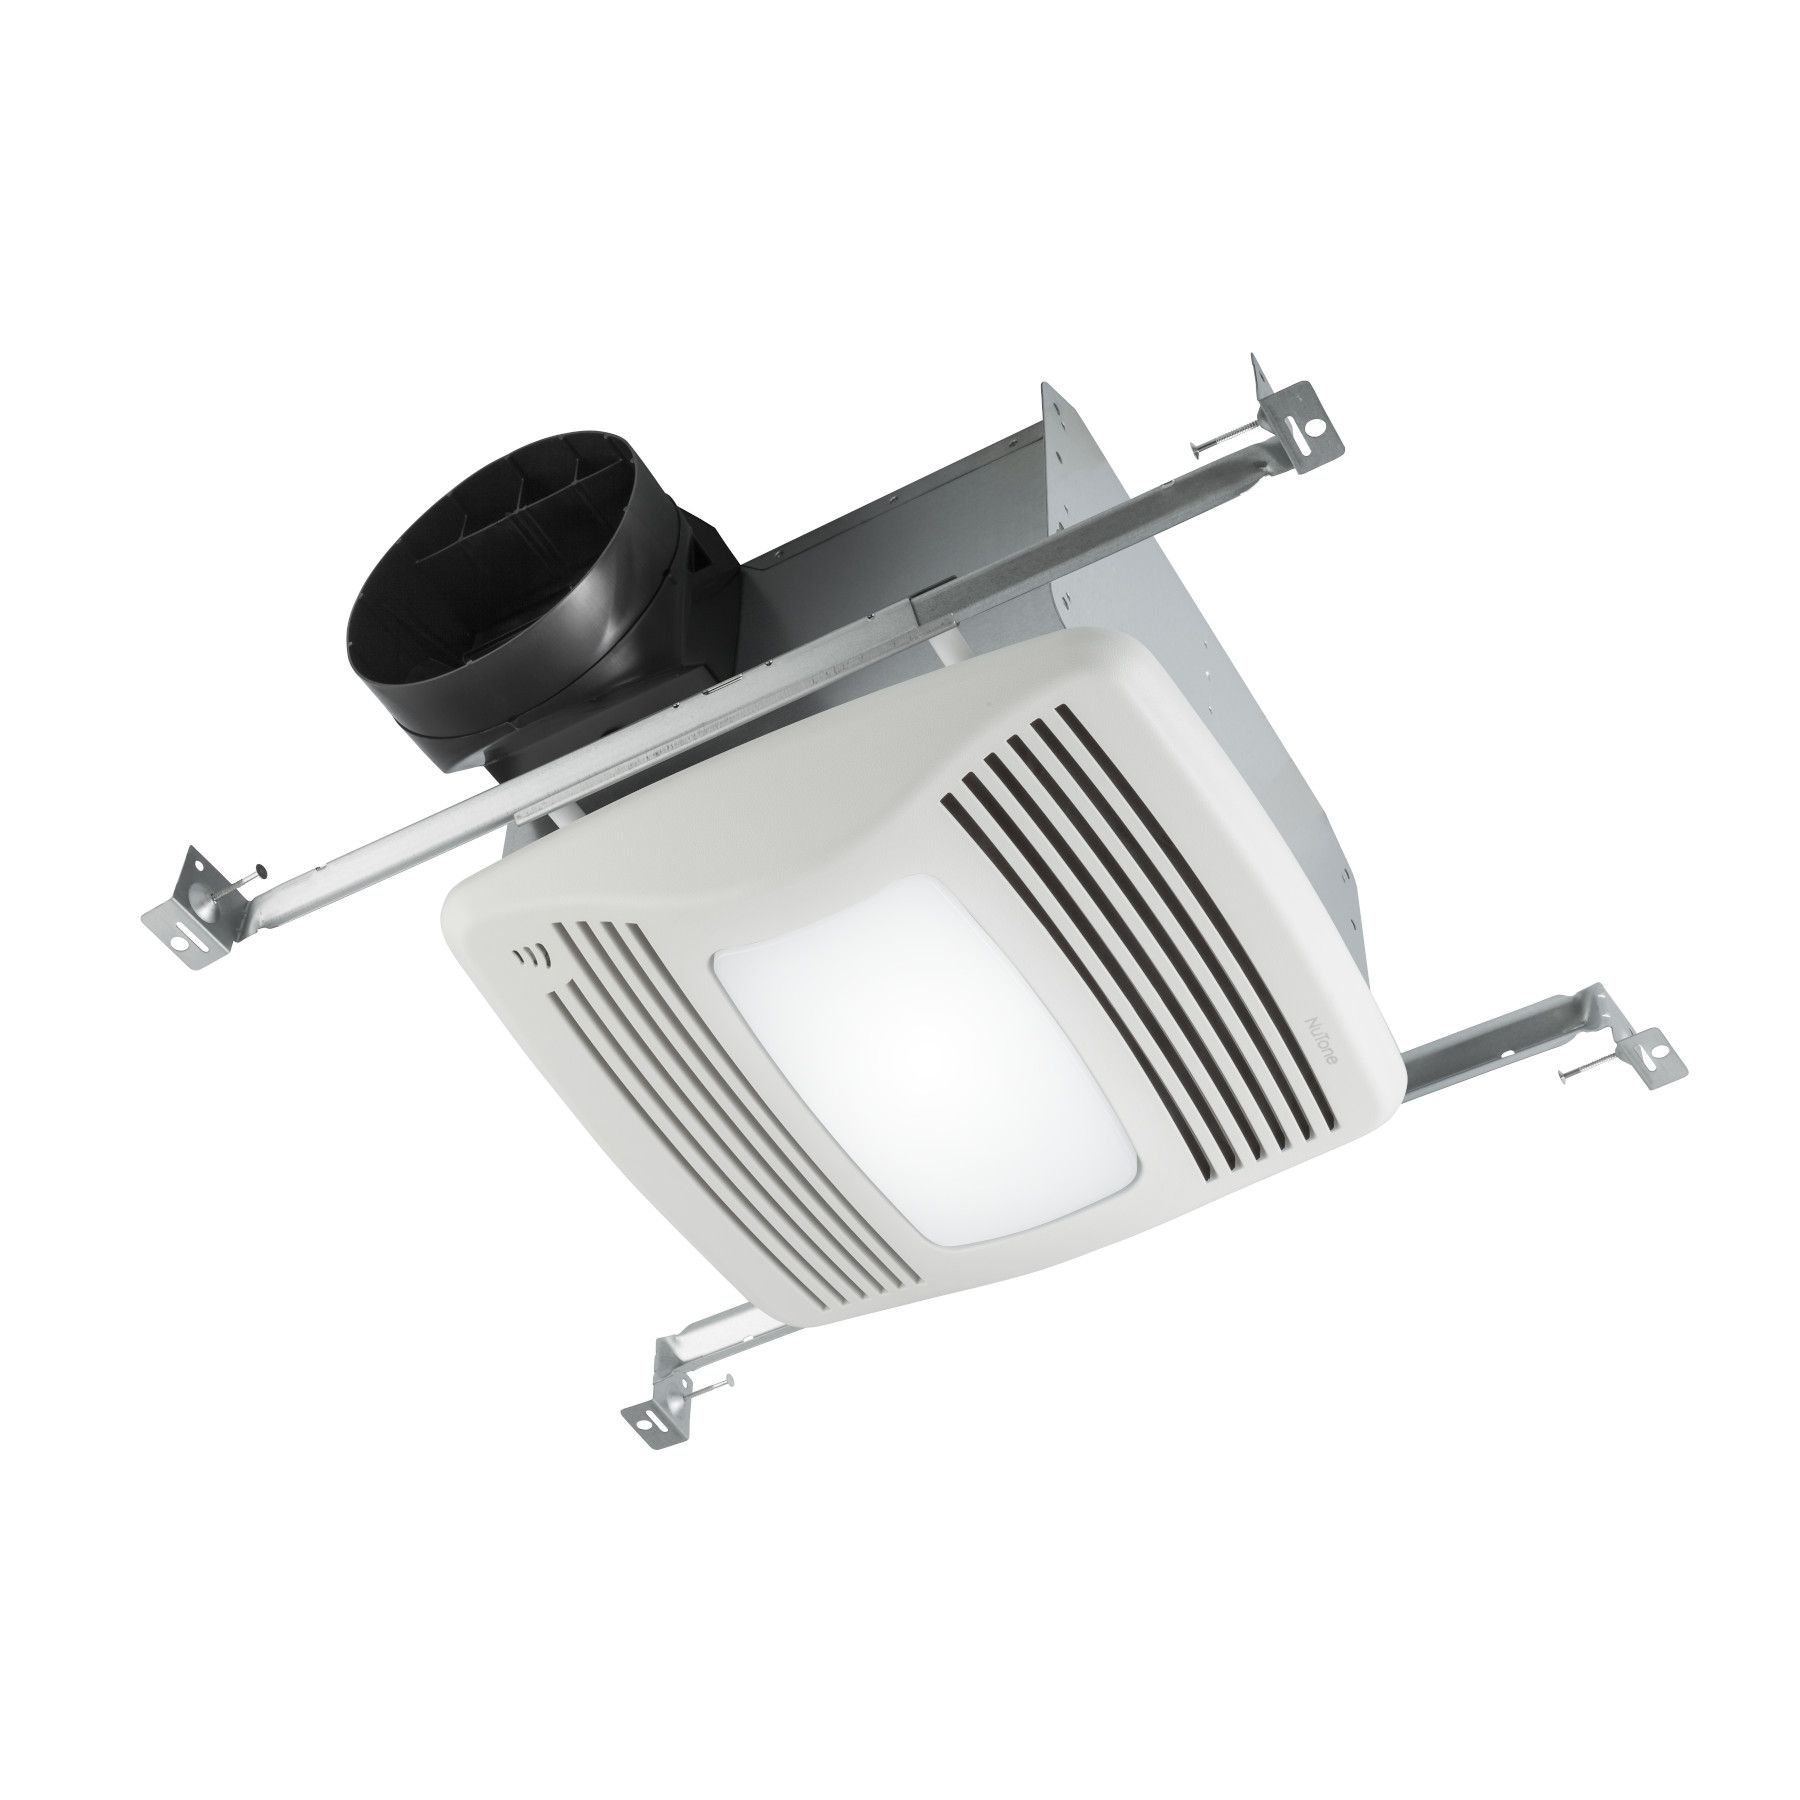 **DISCONTINUED** NuTone® Humidity Sensing Exhaust Ventilation Fan w/ Light & Nightlight, 110 CFM, White, ENERGY STAR®